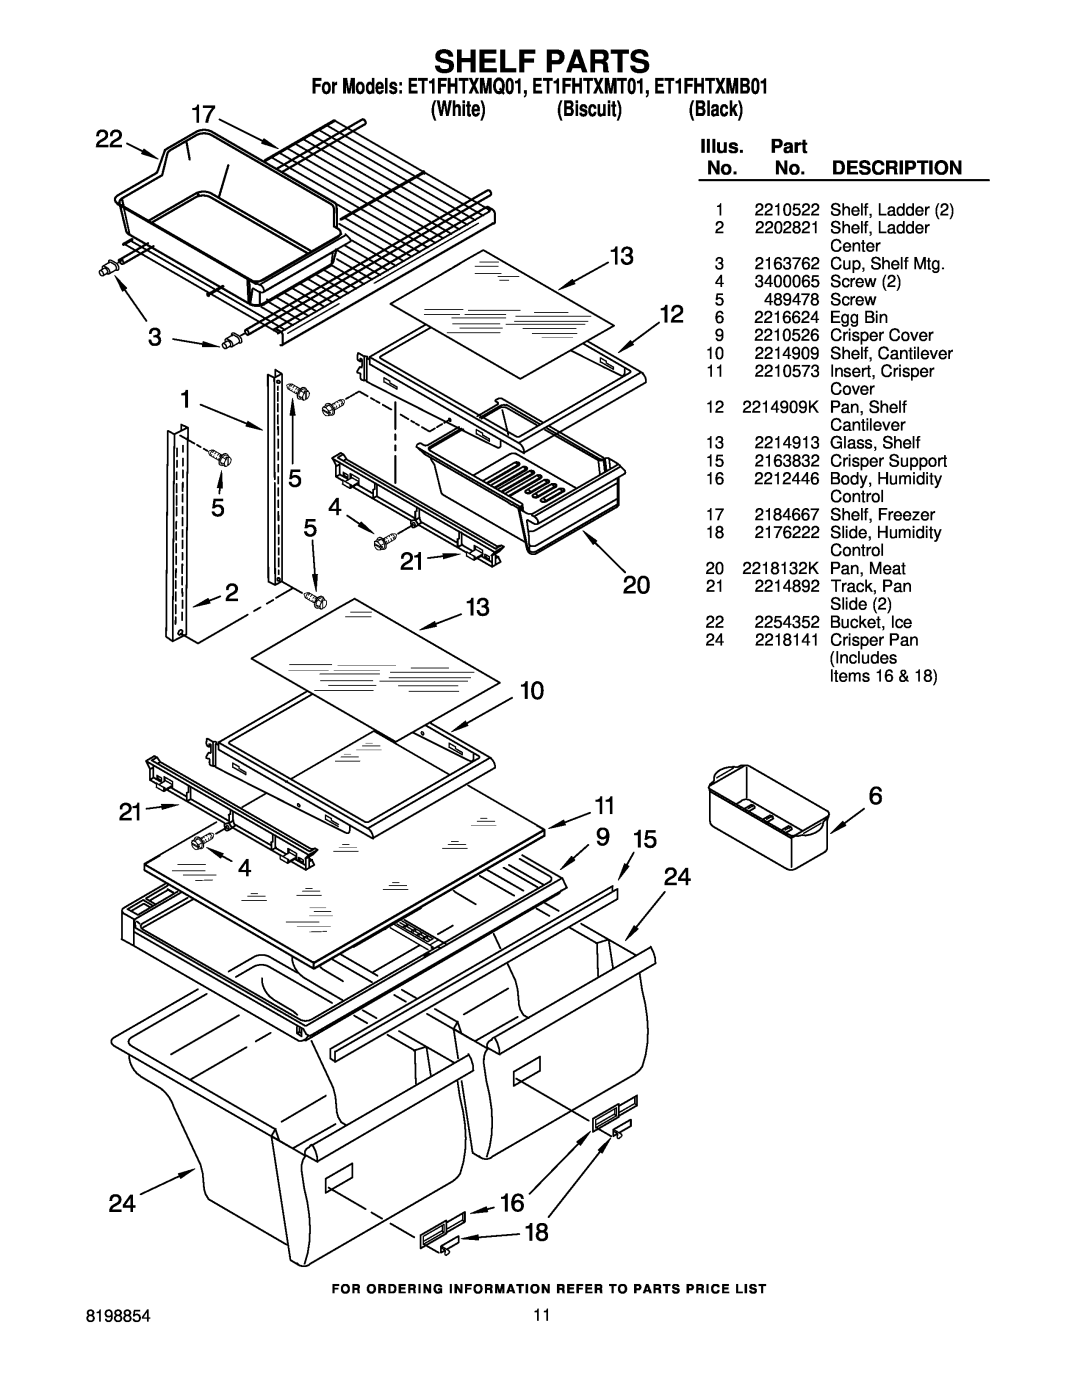 Whirlpool manual Shelf Parts, Illus. Part, For Models ET1FHTXMQ01, ET1FHTXMT01, ET1FHTXMB01, White, Biscuit, Black 